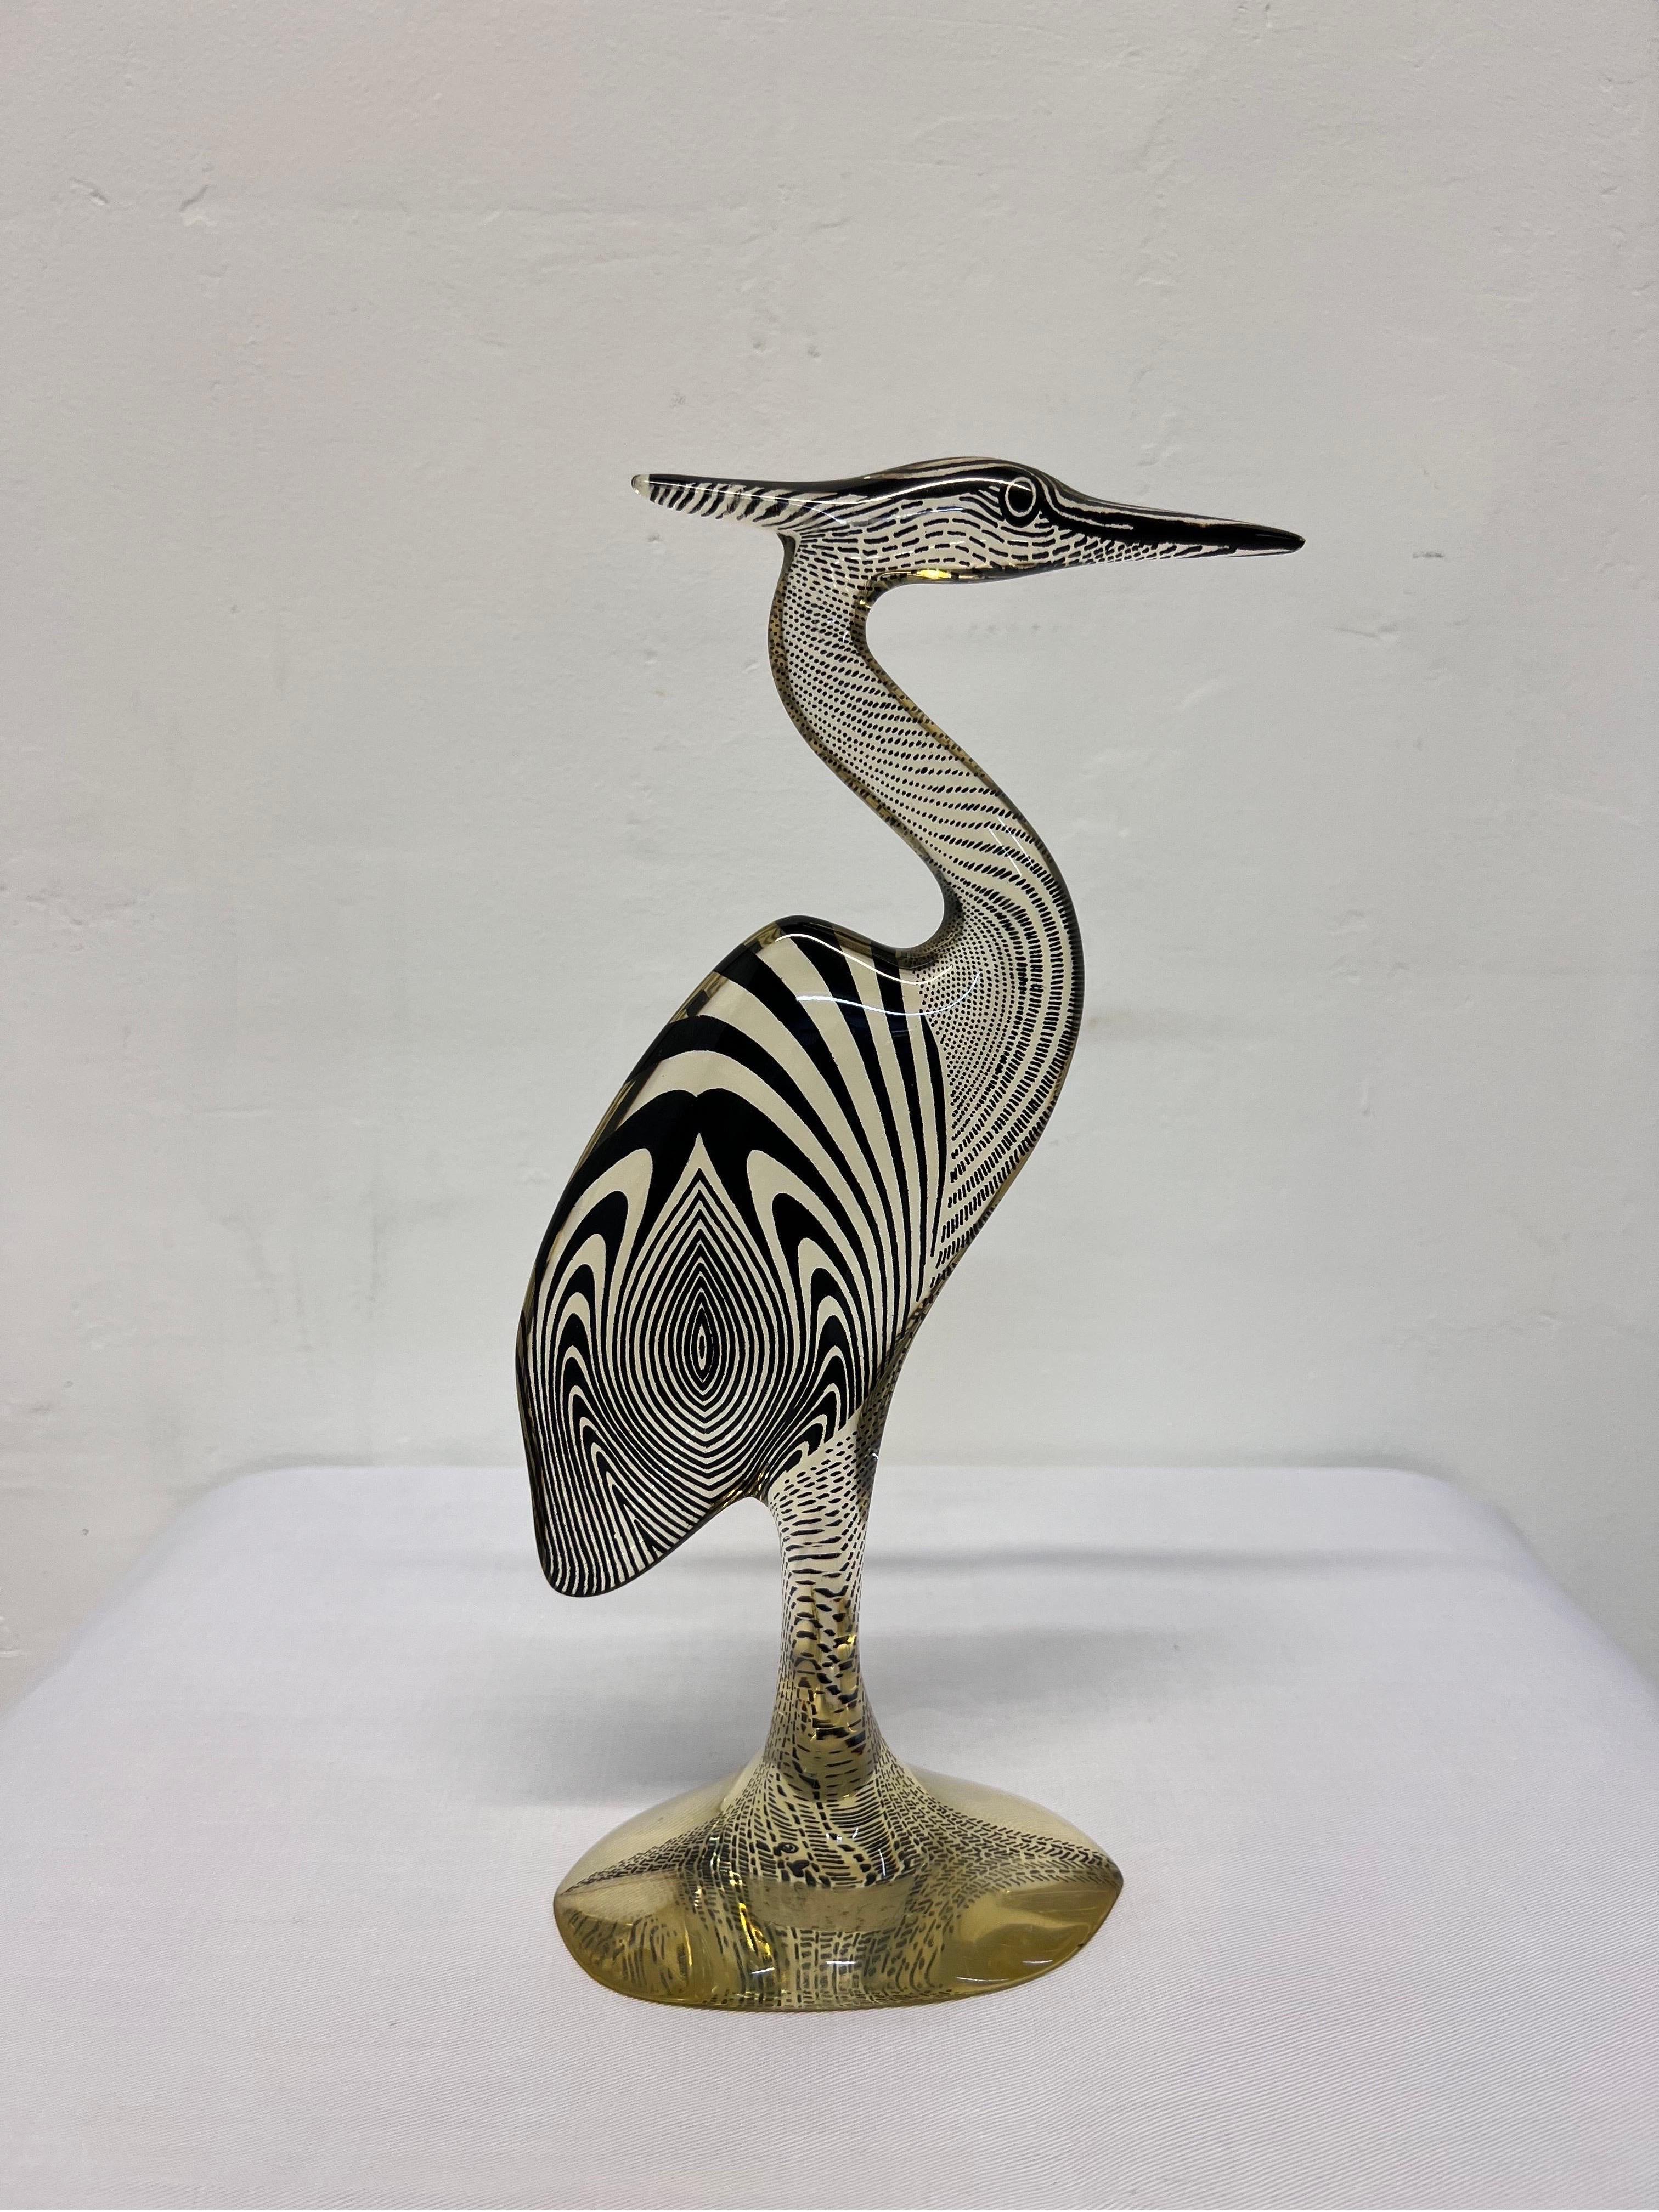 Kinetic resin Heron sculpture by Abraham Palatnik, Brazil 1960s.